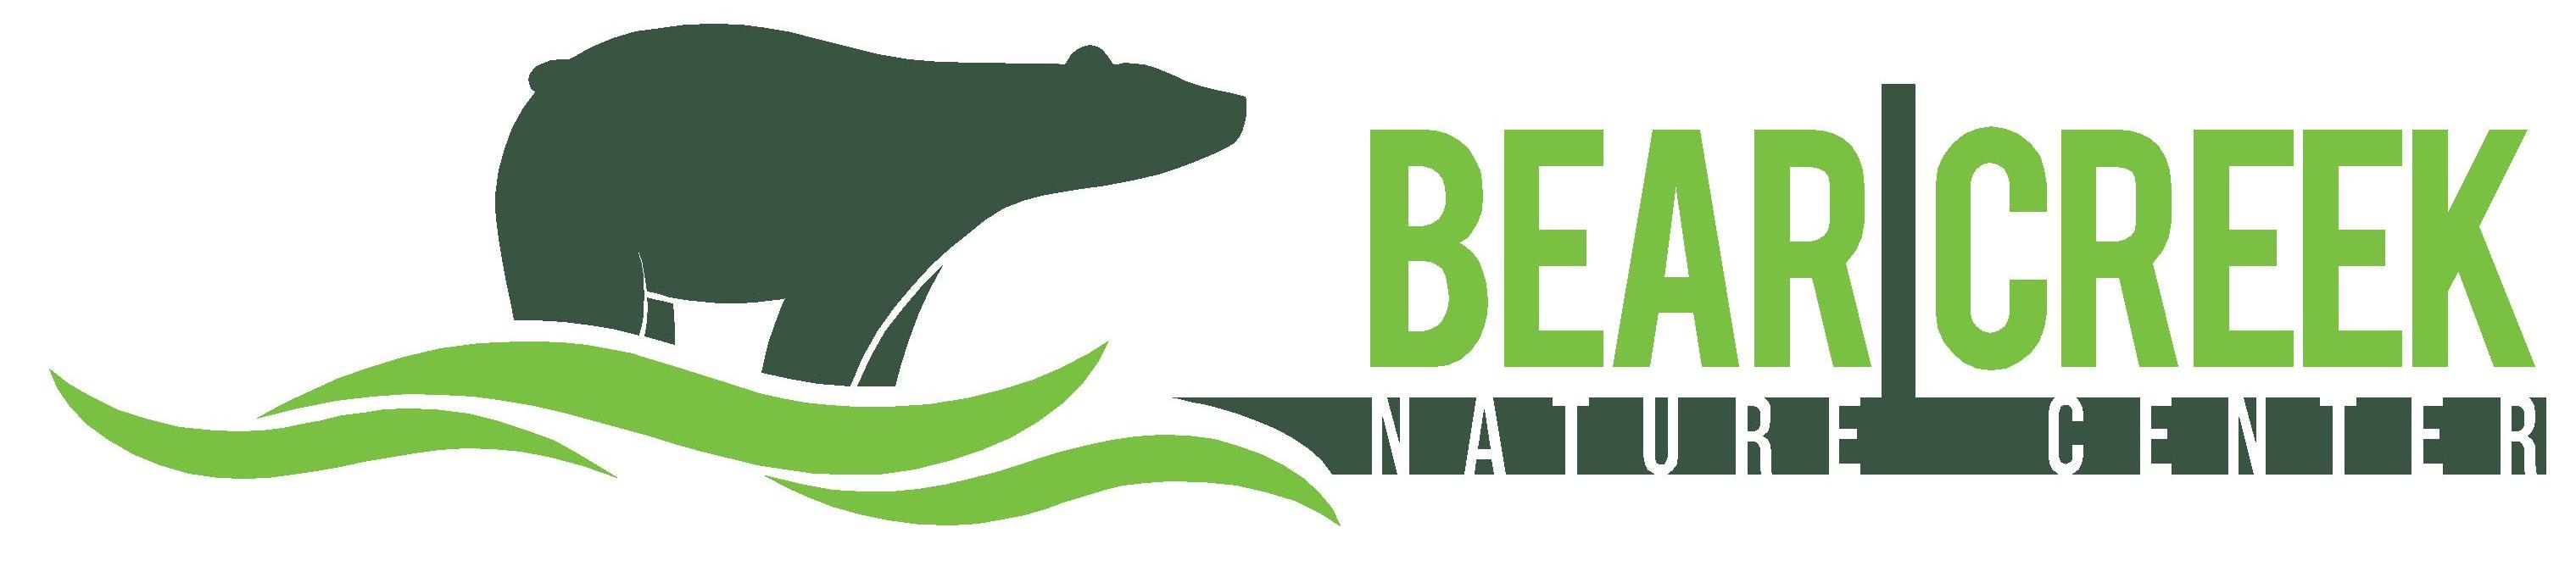 Bear Creek Nature Center Logo